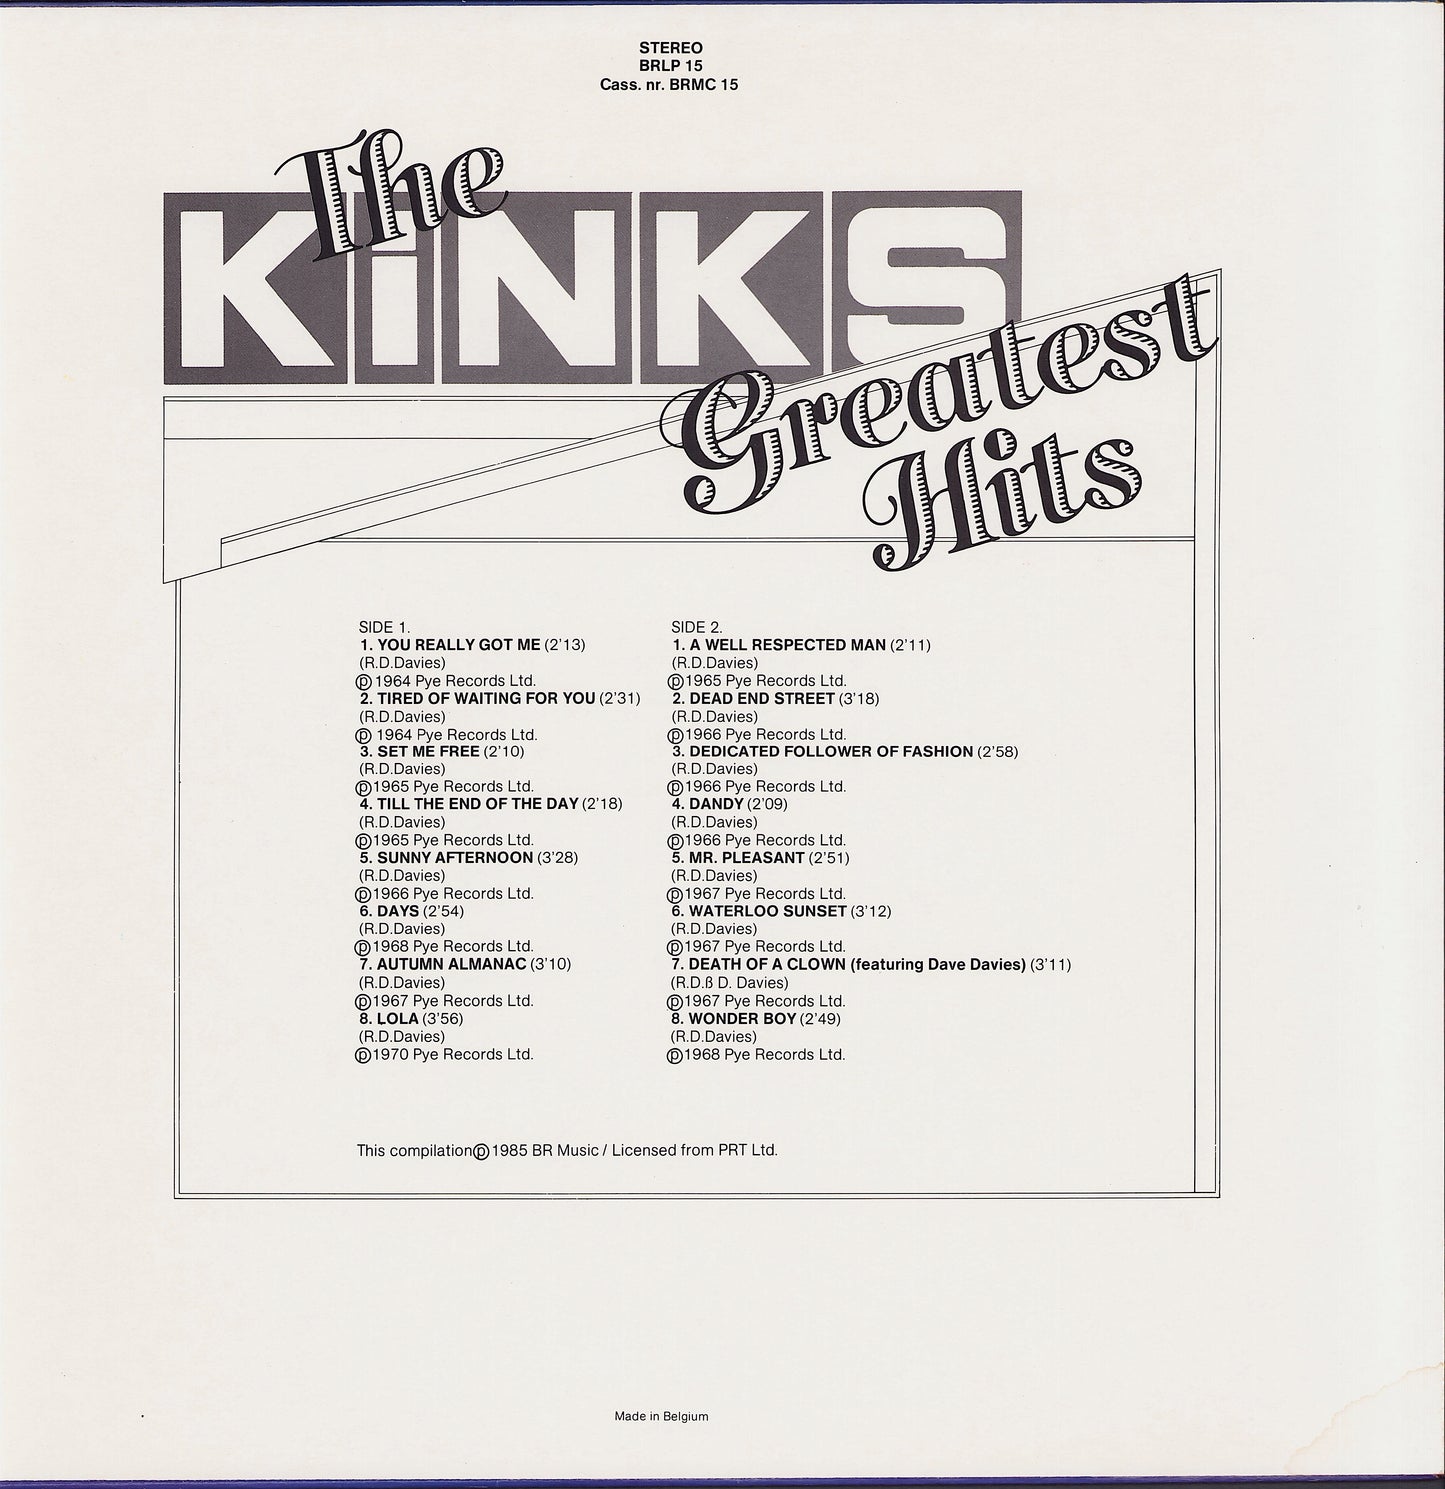 The Kinks - Greatest Hits Vinyl LP